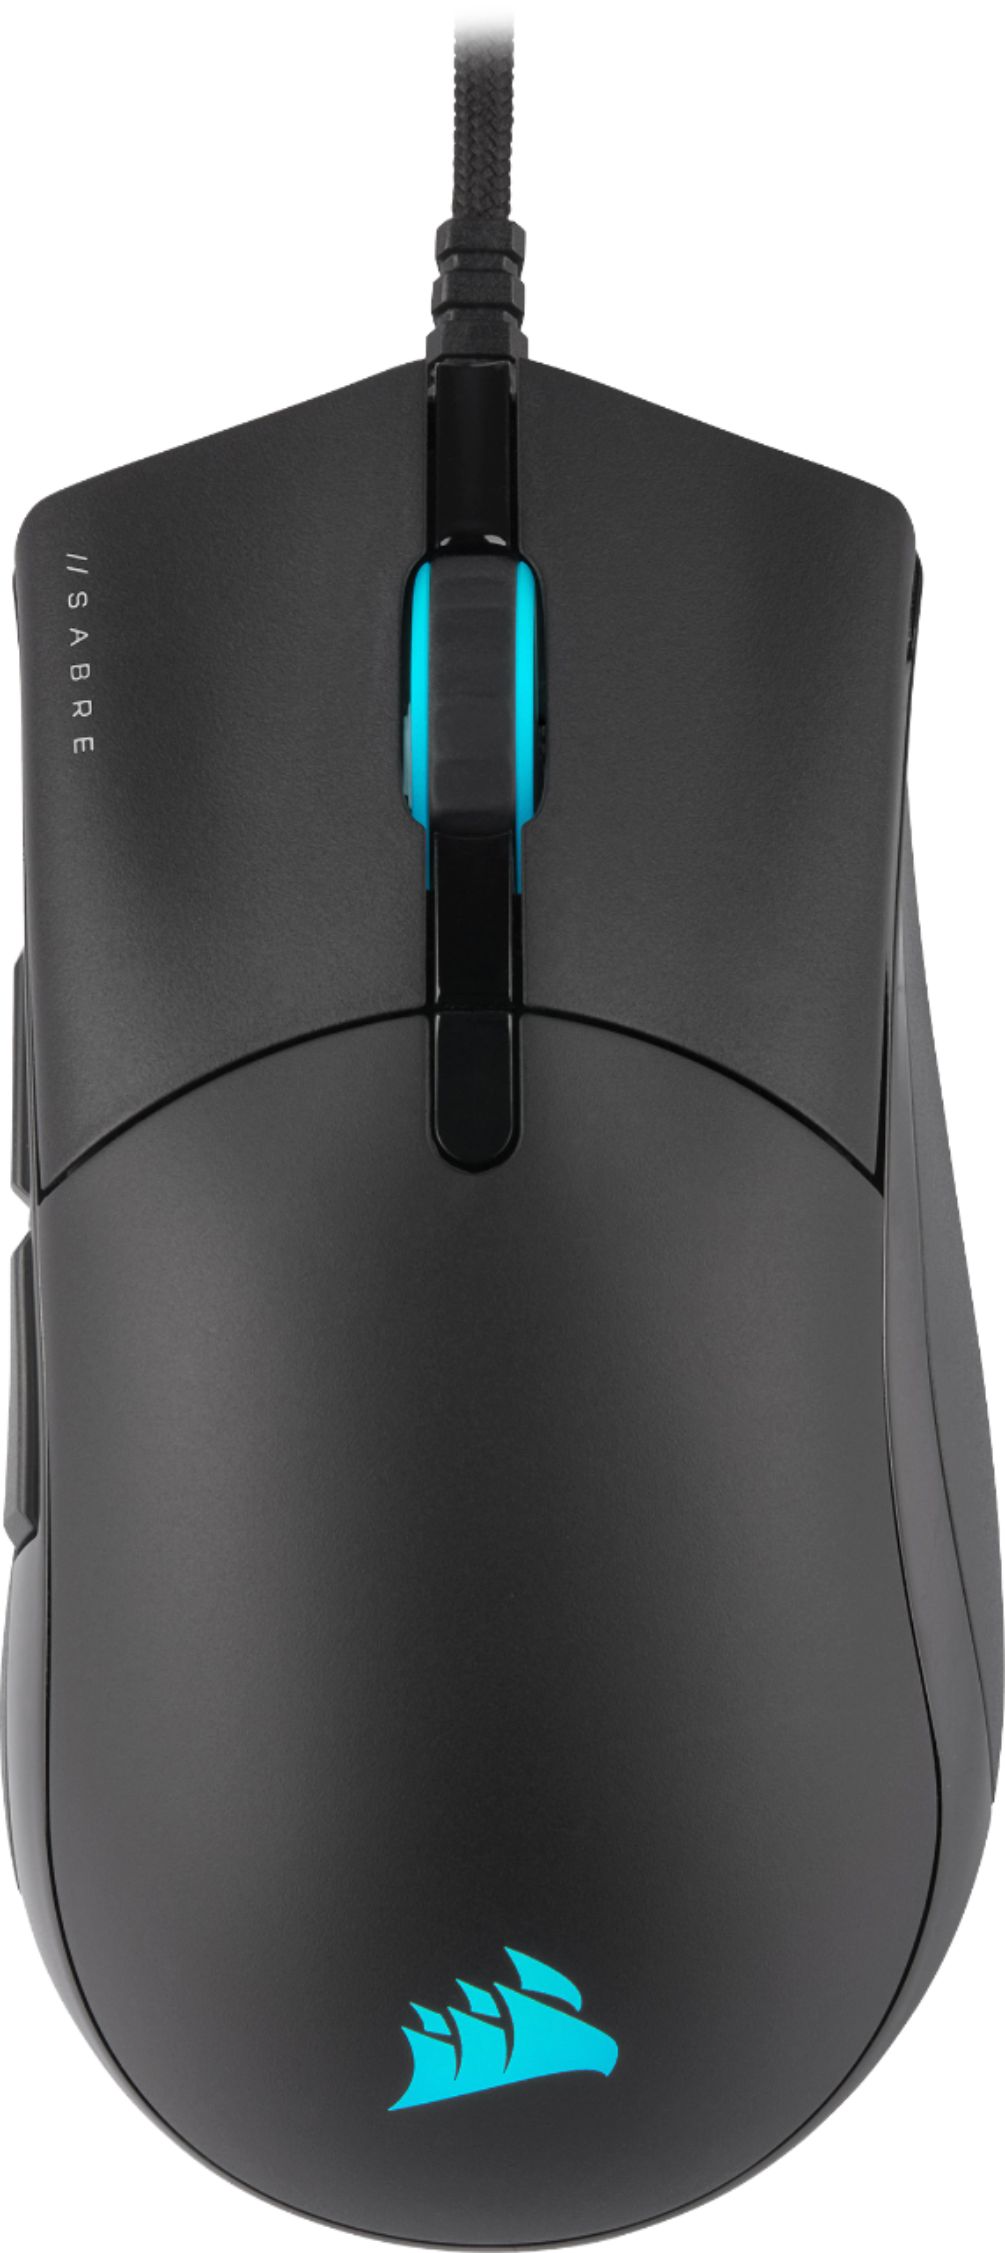 Buy cheap Aim Trainer Pro + Mouse Enhancer Pro cd key - lowest price